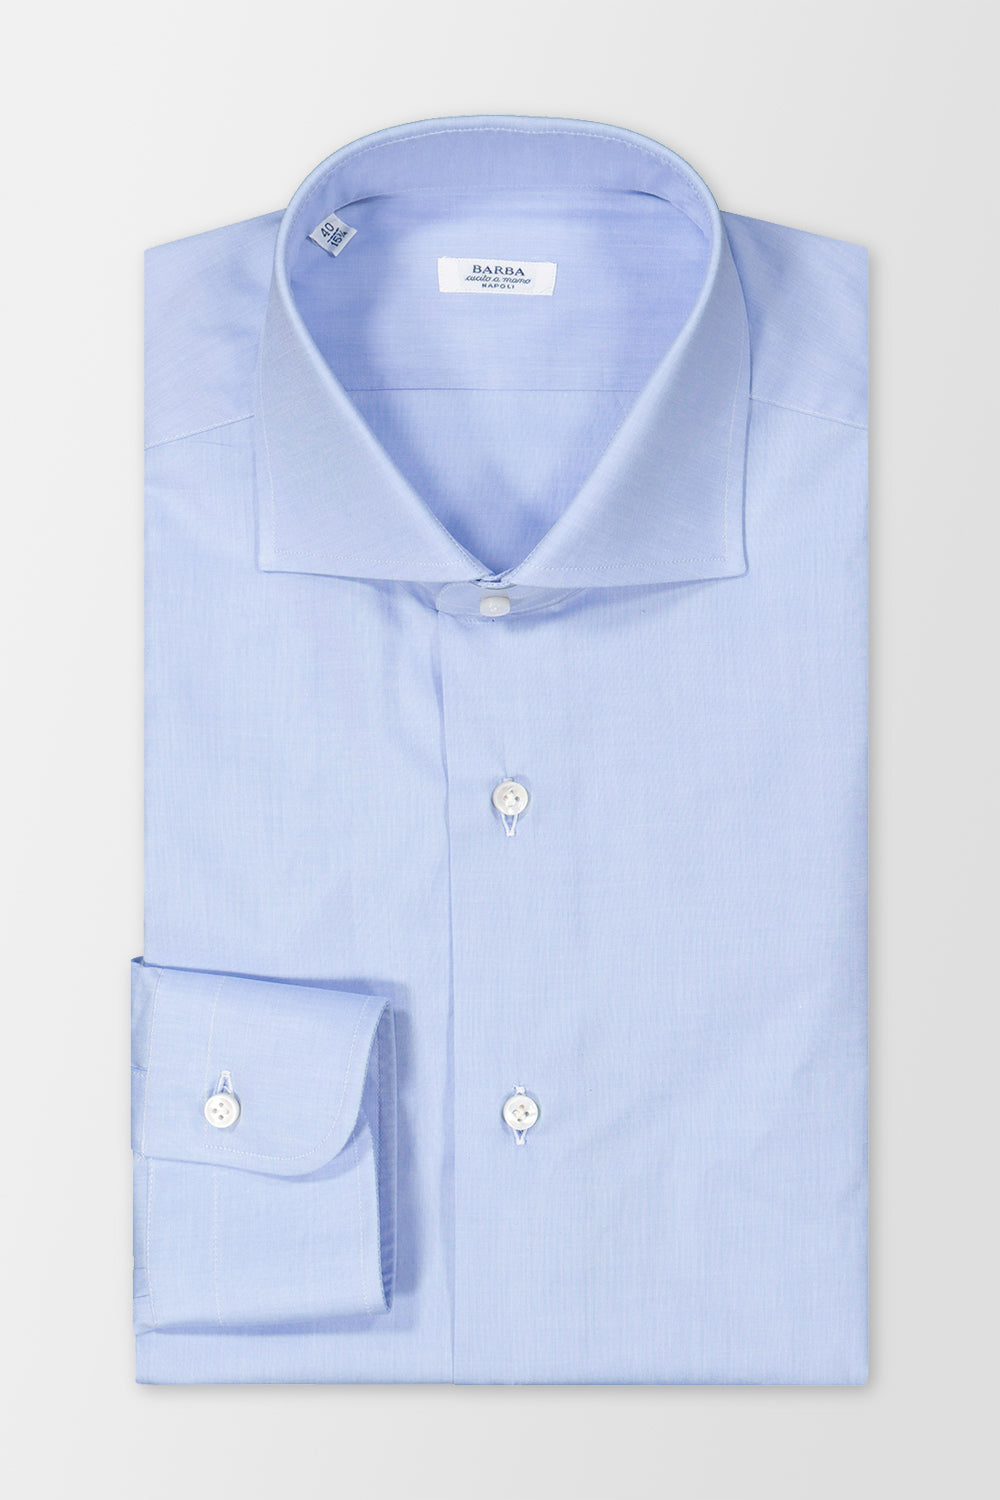 Barba Napoli Blue Classic Shirt